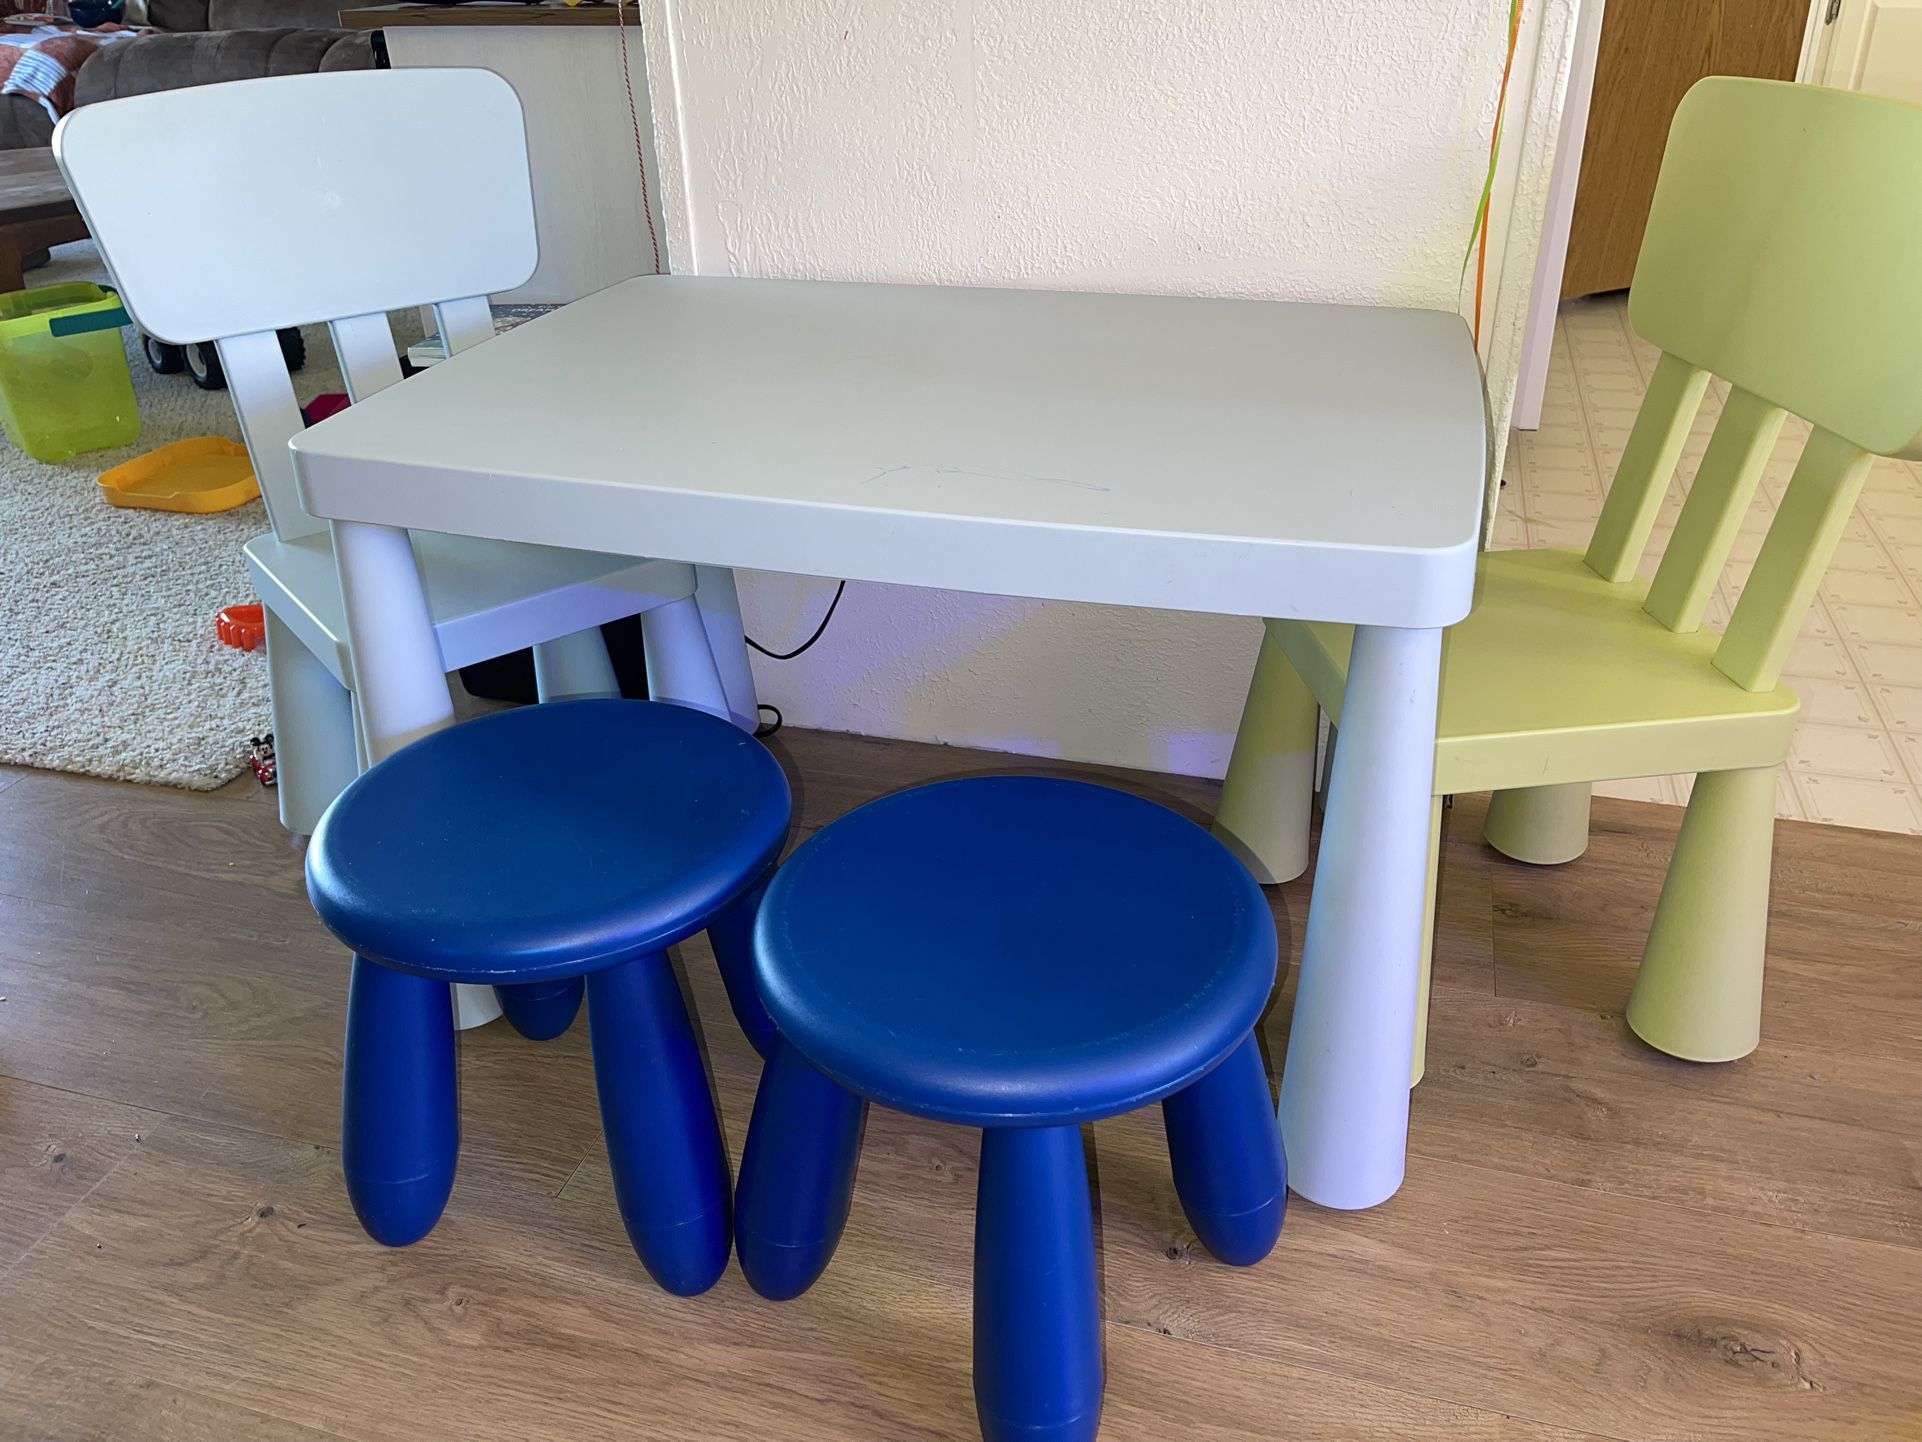 IKEA Kids Table